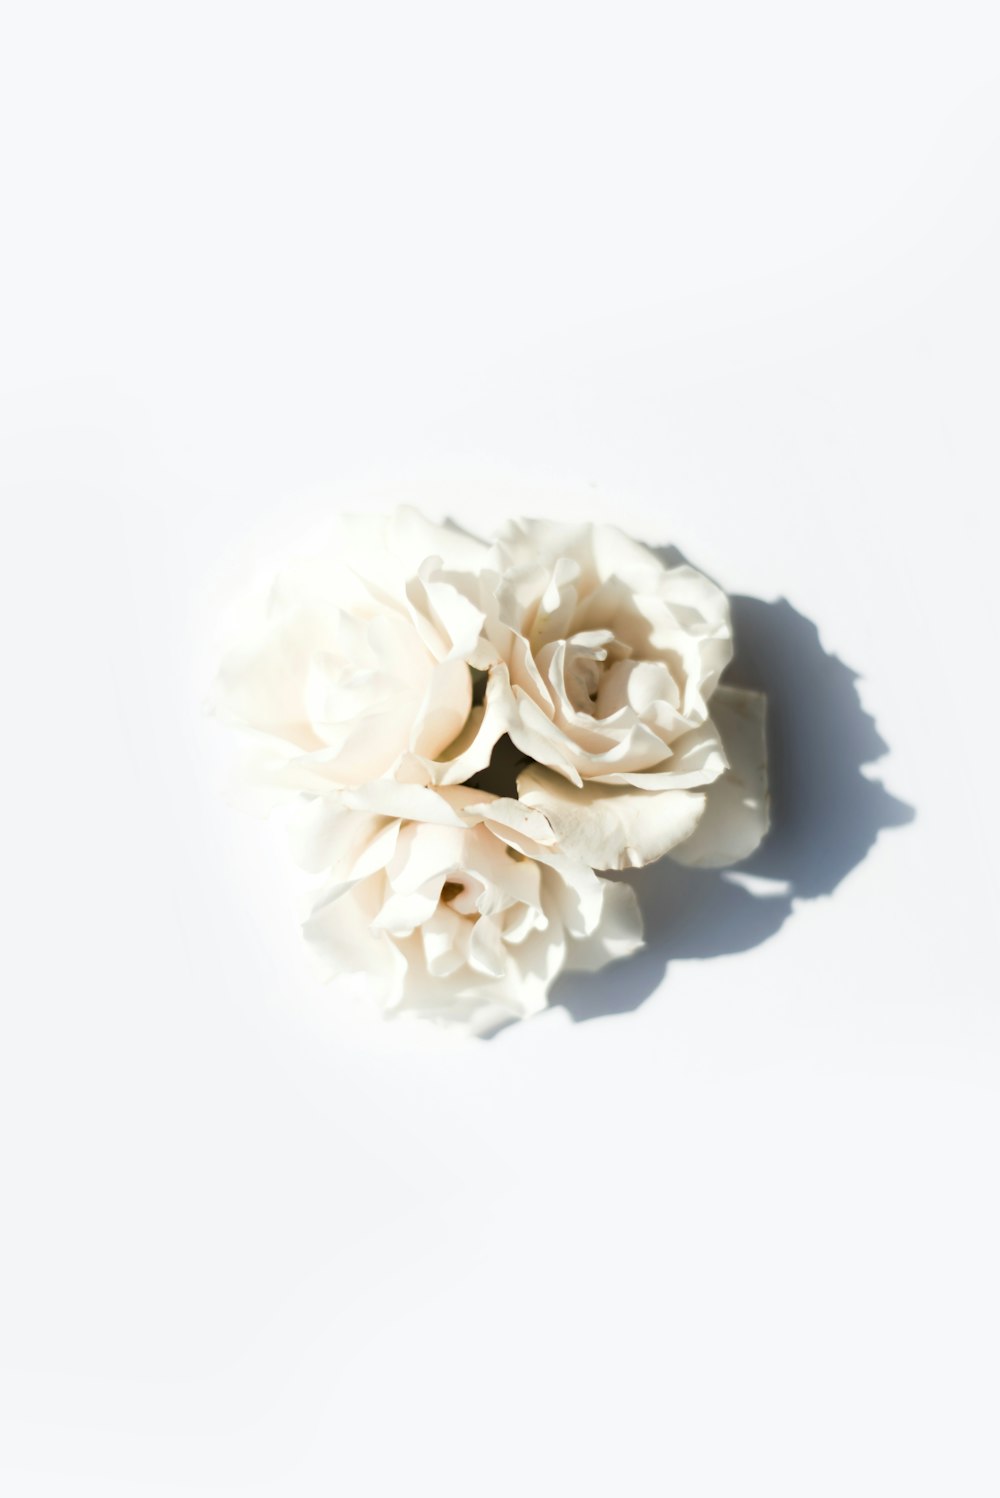 flor de pétalo blanco